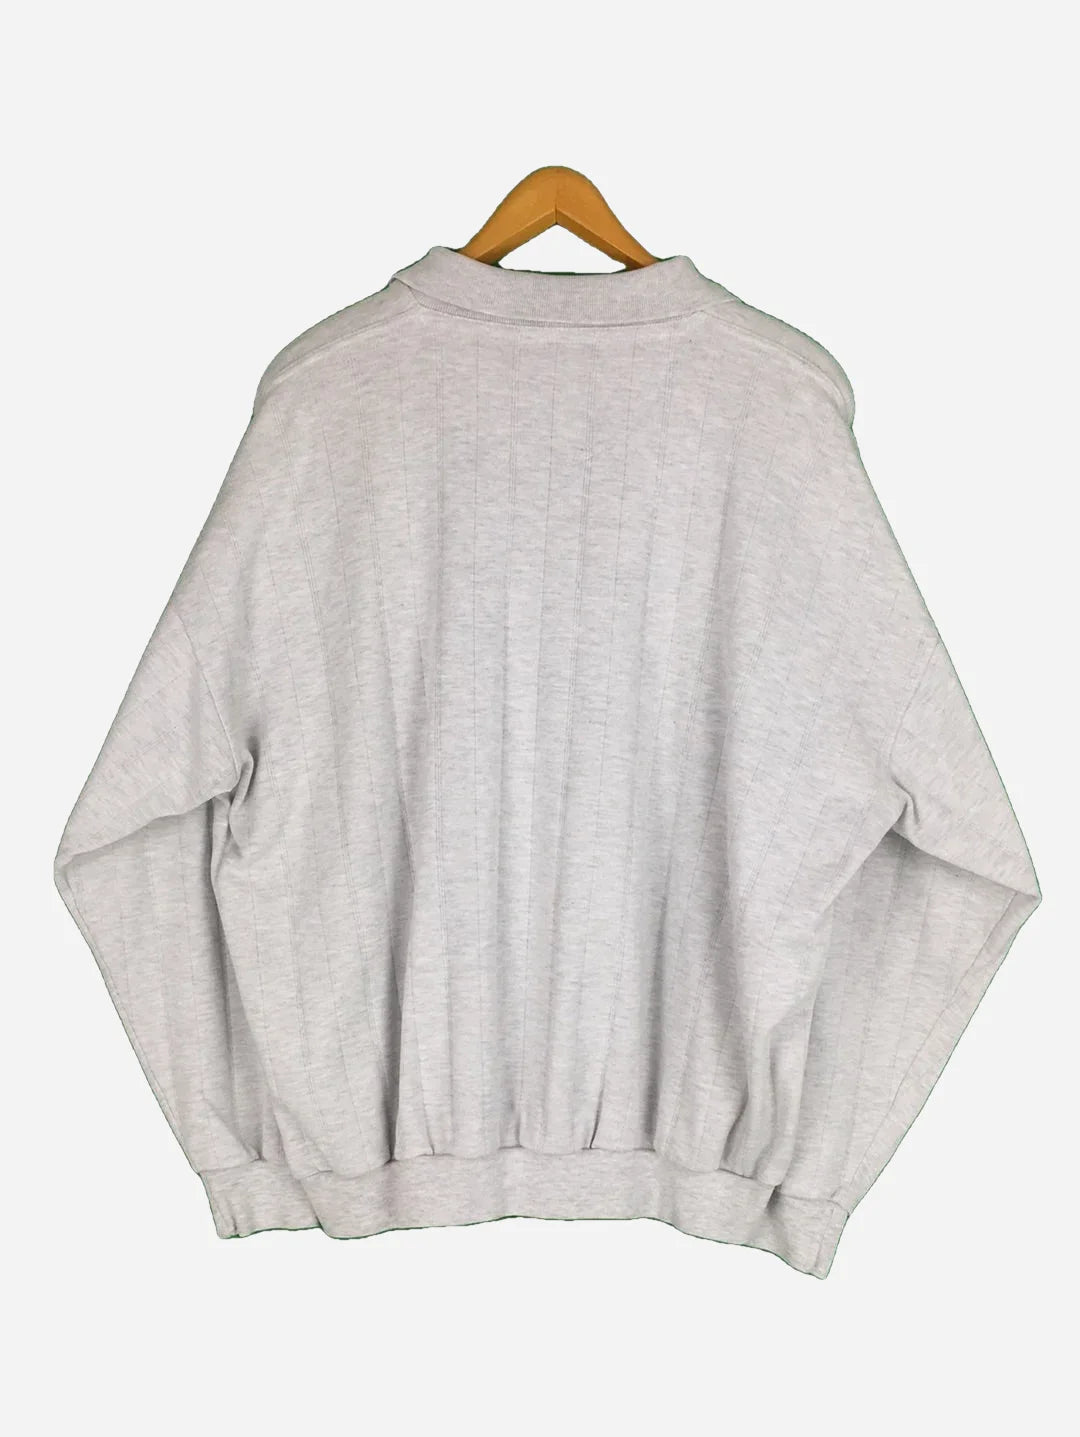 Westbury Knopf Sweater (L)